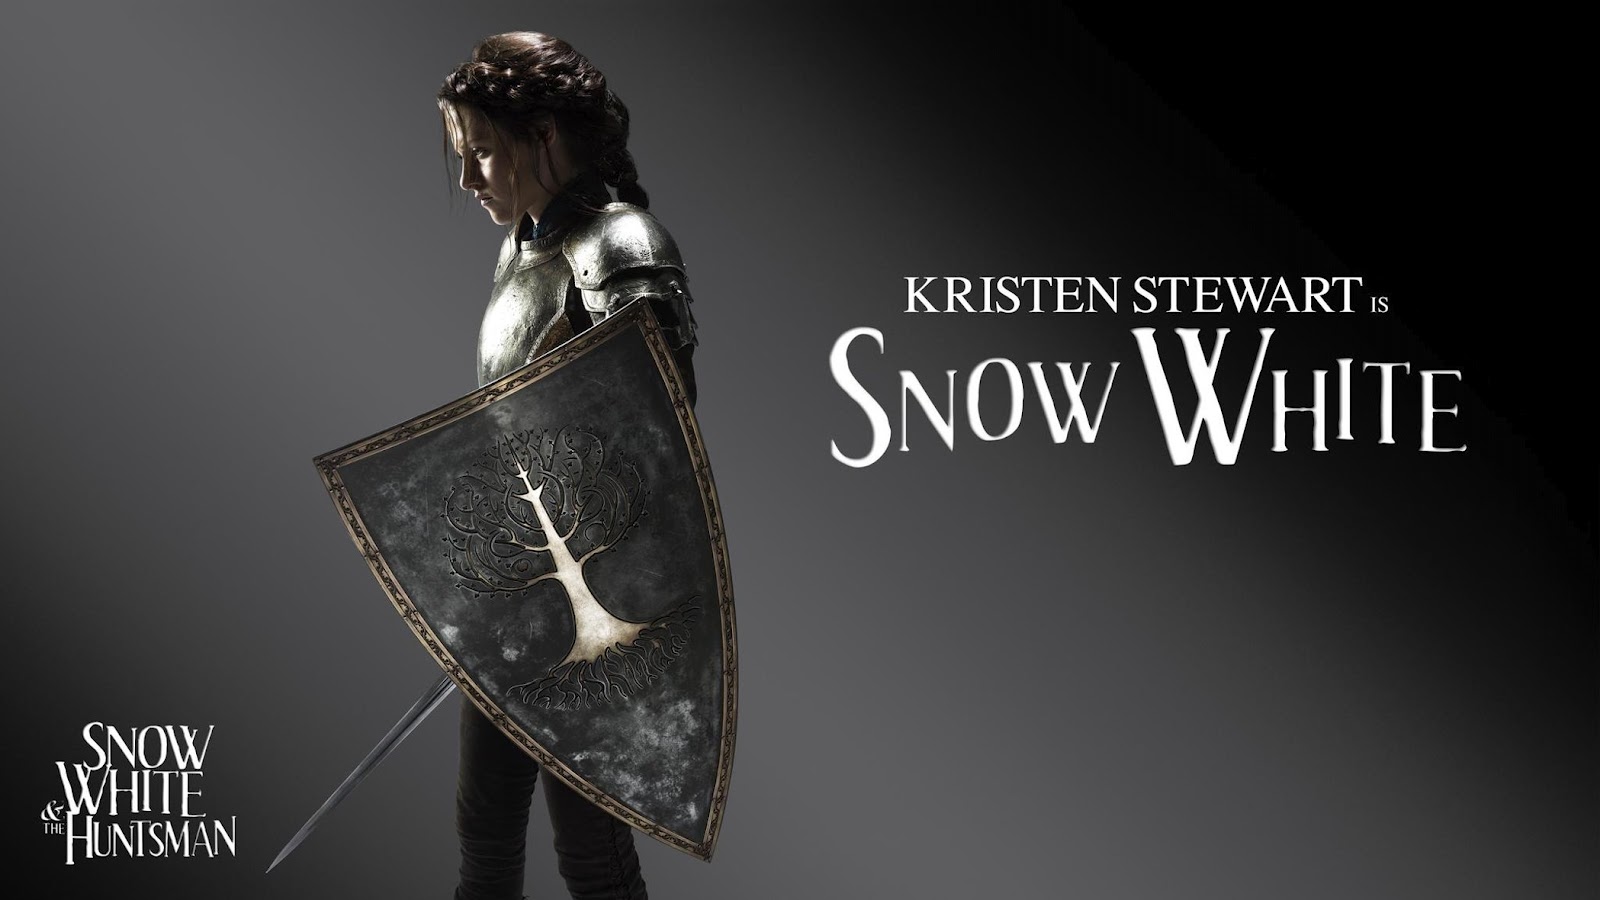 http://2.bp.blogspot.com/-JQvDxfZ_o7k/T0LF6s-9QII/AAAAAAAADC8/pUlQRhPSAp8/s1600/Kristen-Stewart-is-Snow-White.jpg